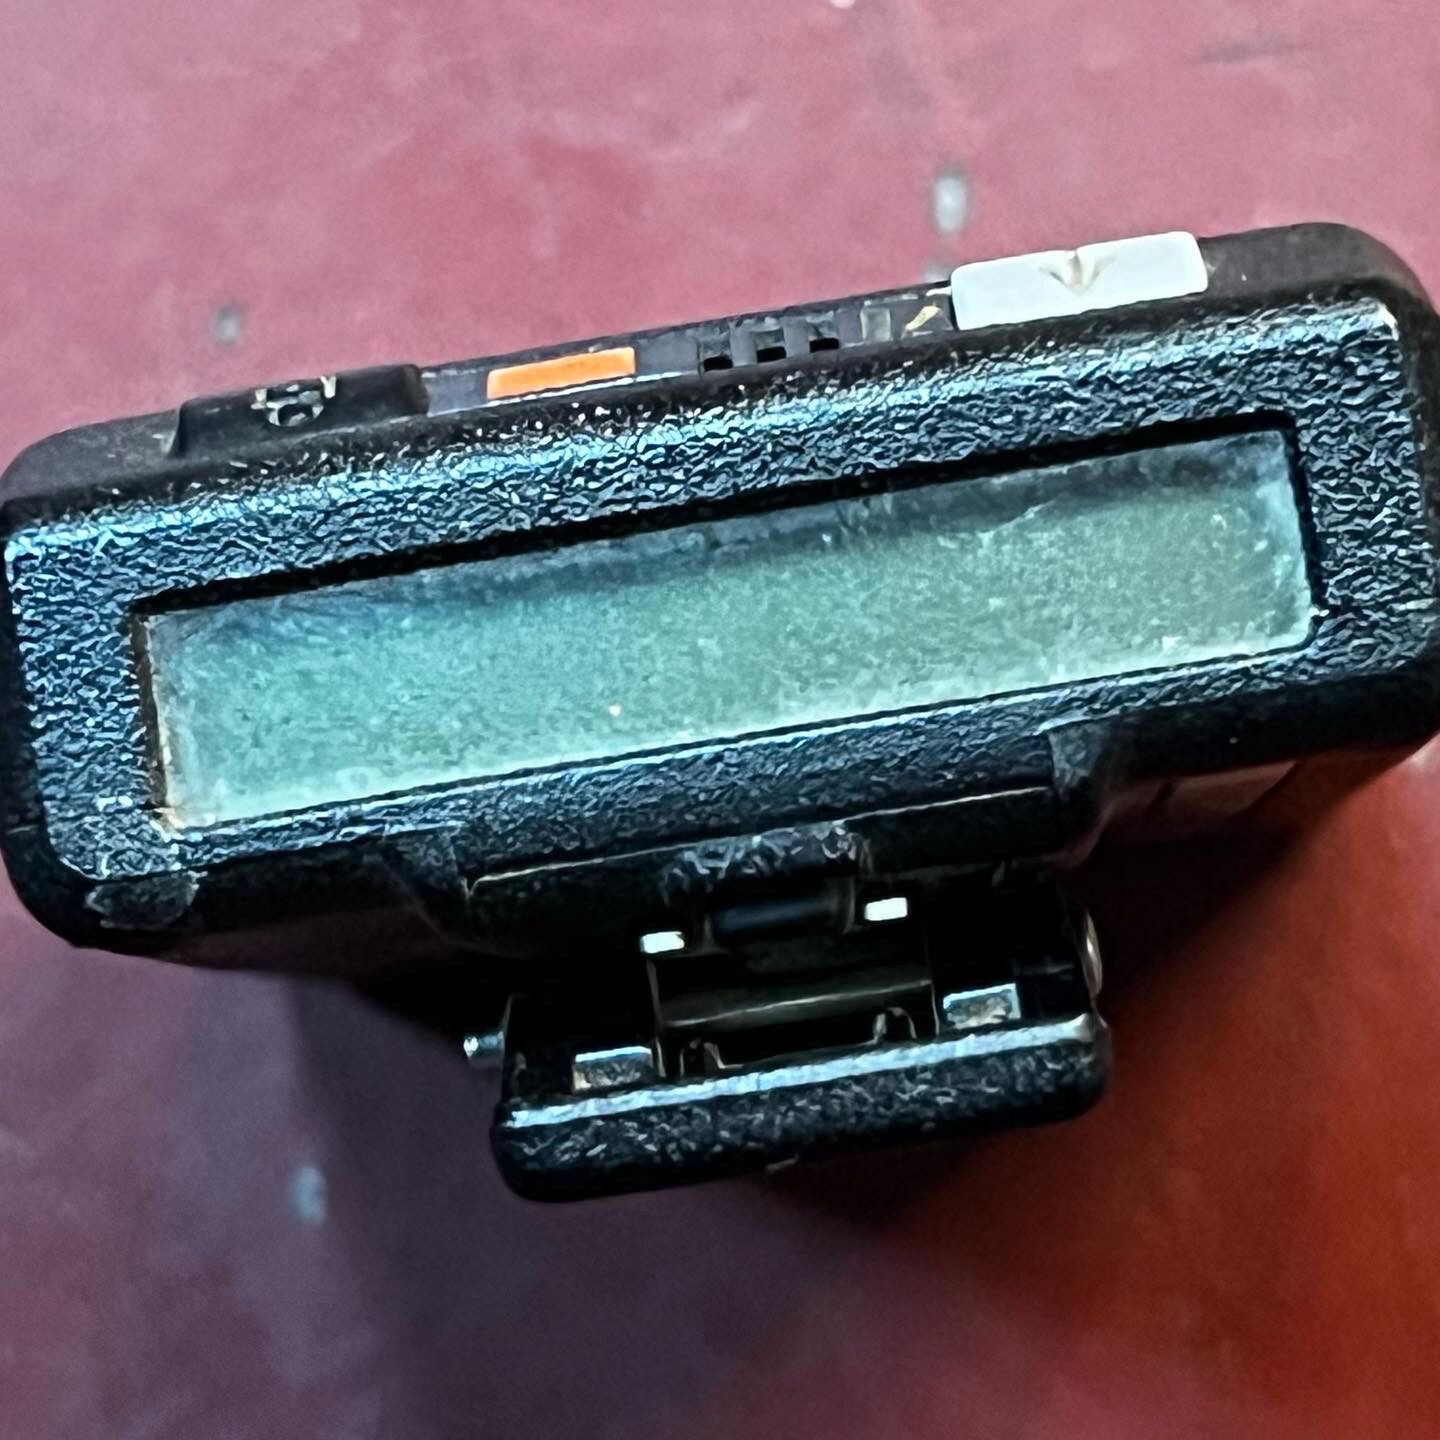 Original 1990’s Motorola Pager.